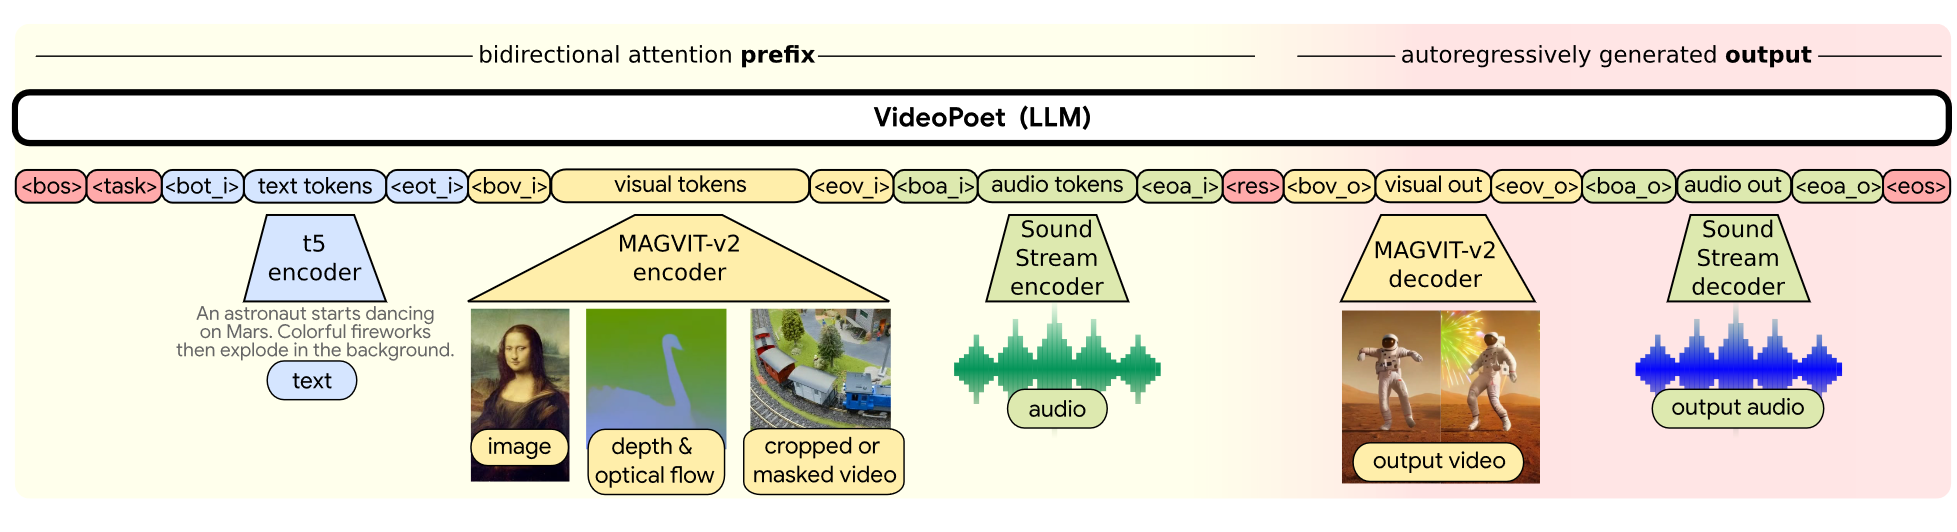 Sequence layout for VideoPoet. 其中模态不可知标记为深红色；与文本相关的组件为蓝色；与视觉相关的组件为黄色；音频相关组件呈绿色。浅黄色布局的左侧部分表示双向前缀输入。深红色的右侧部分代表具有因果注意力的自回归生成的输出。